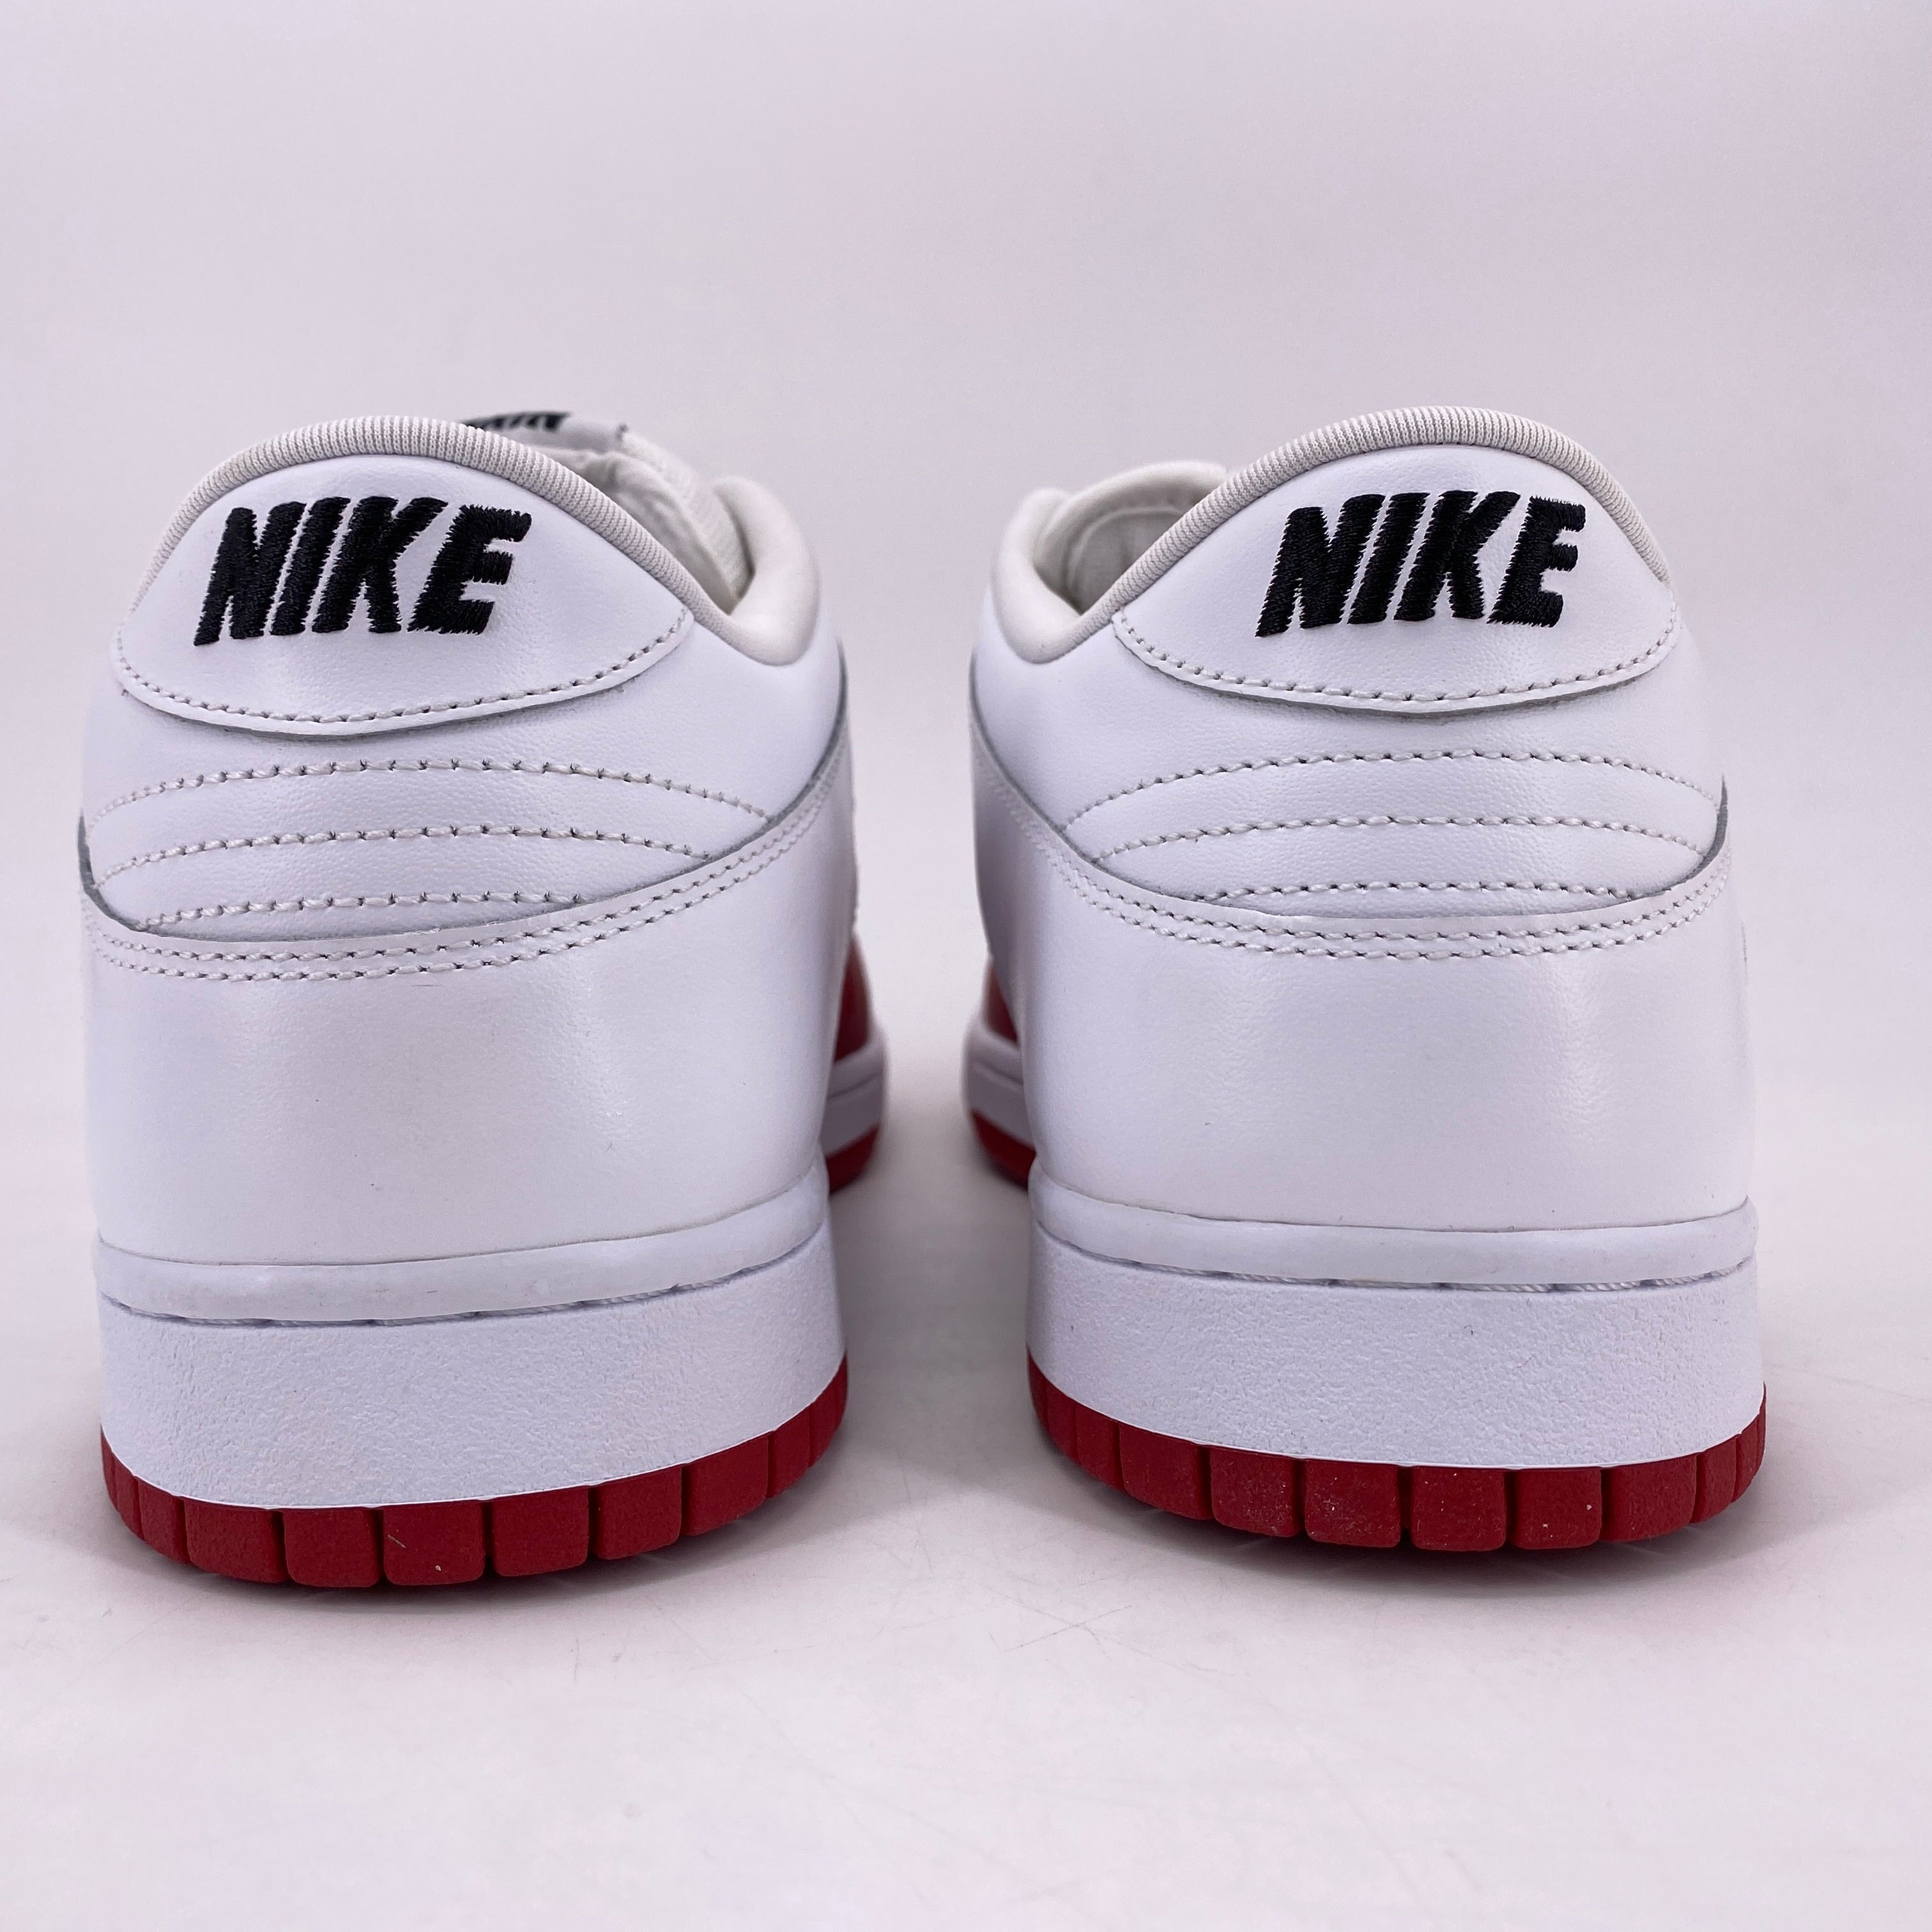 Nike SB Dunk Low "Supreme Jewel Red" 2019 New Size 13